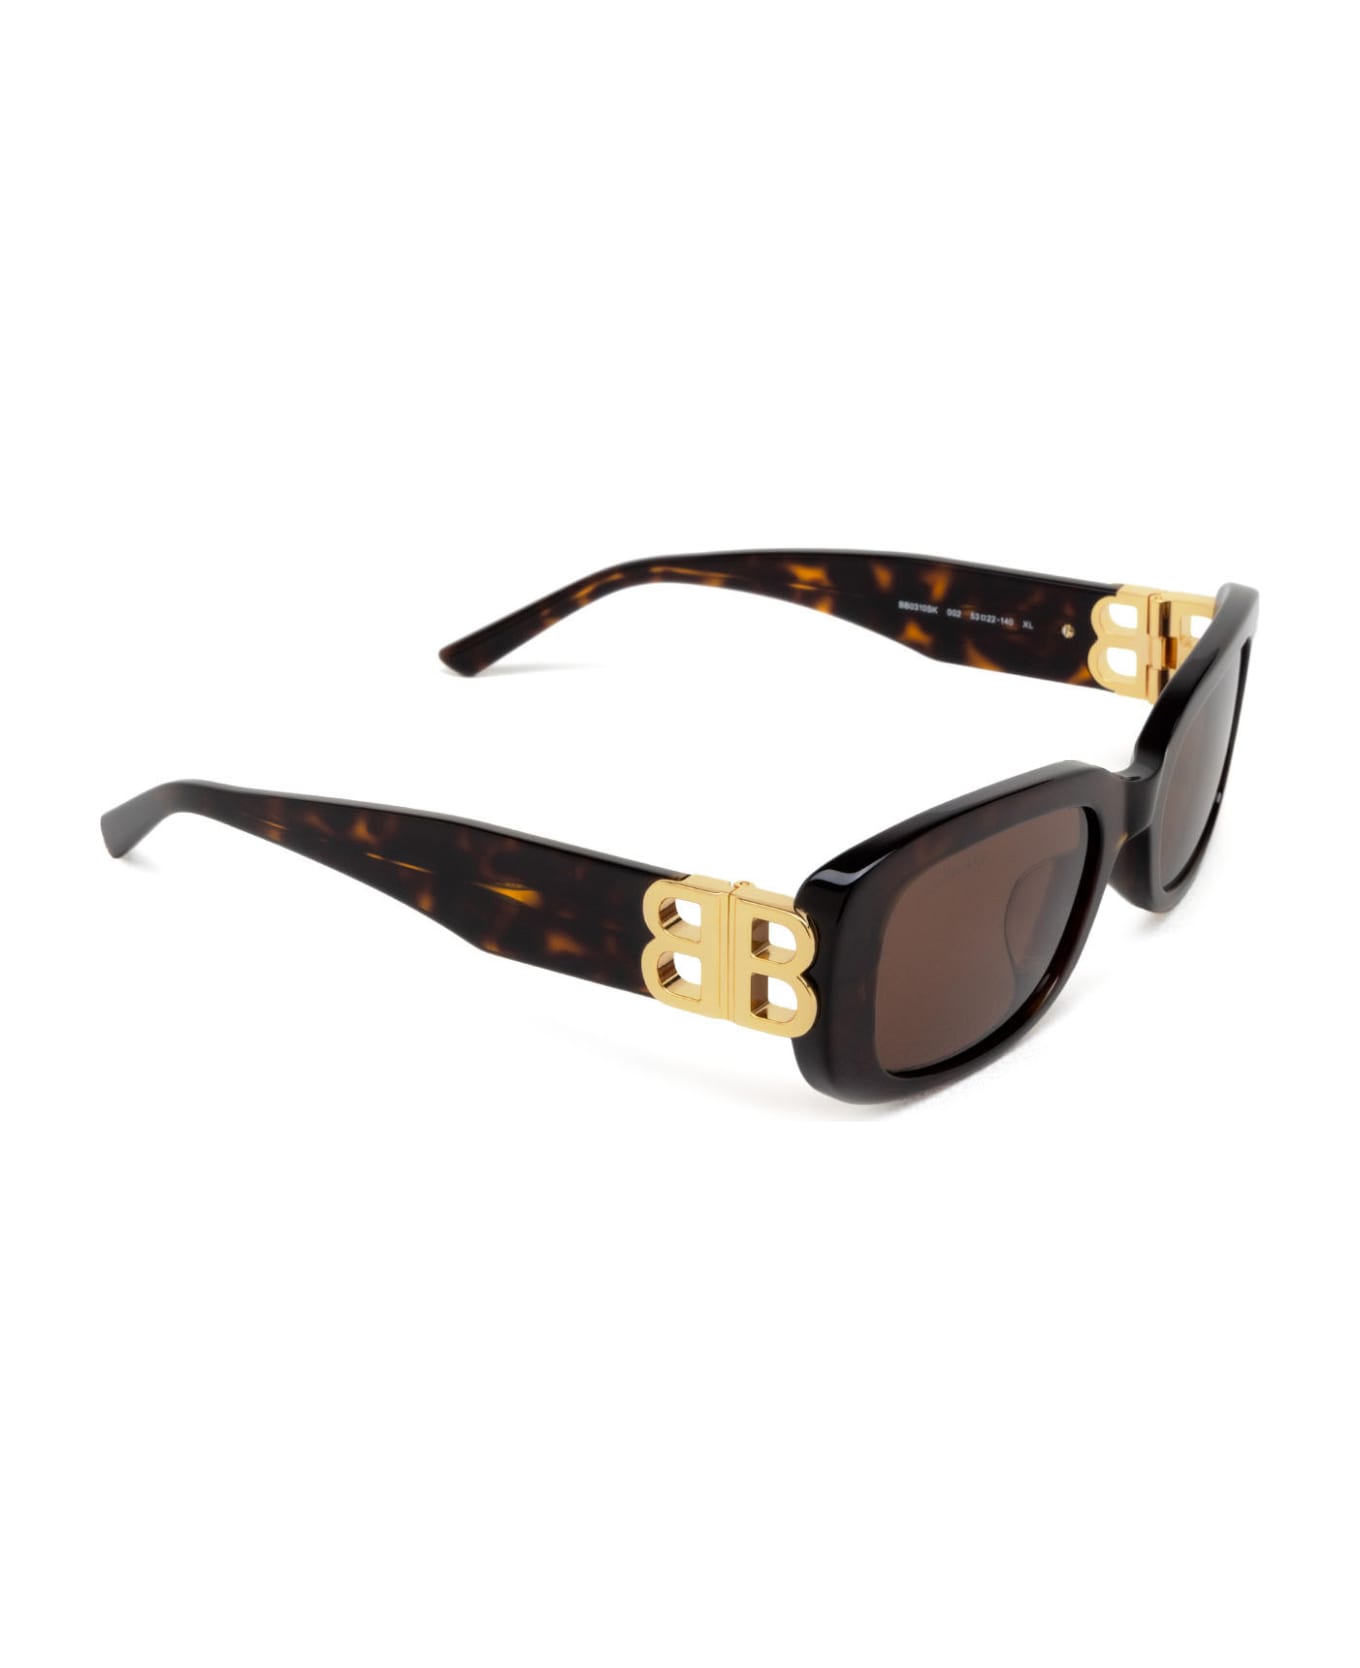 Balenciaga Eyewear Bb0310sk Sunglasses - Tortoise